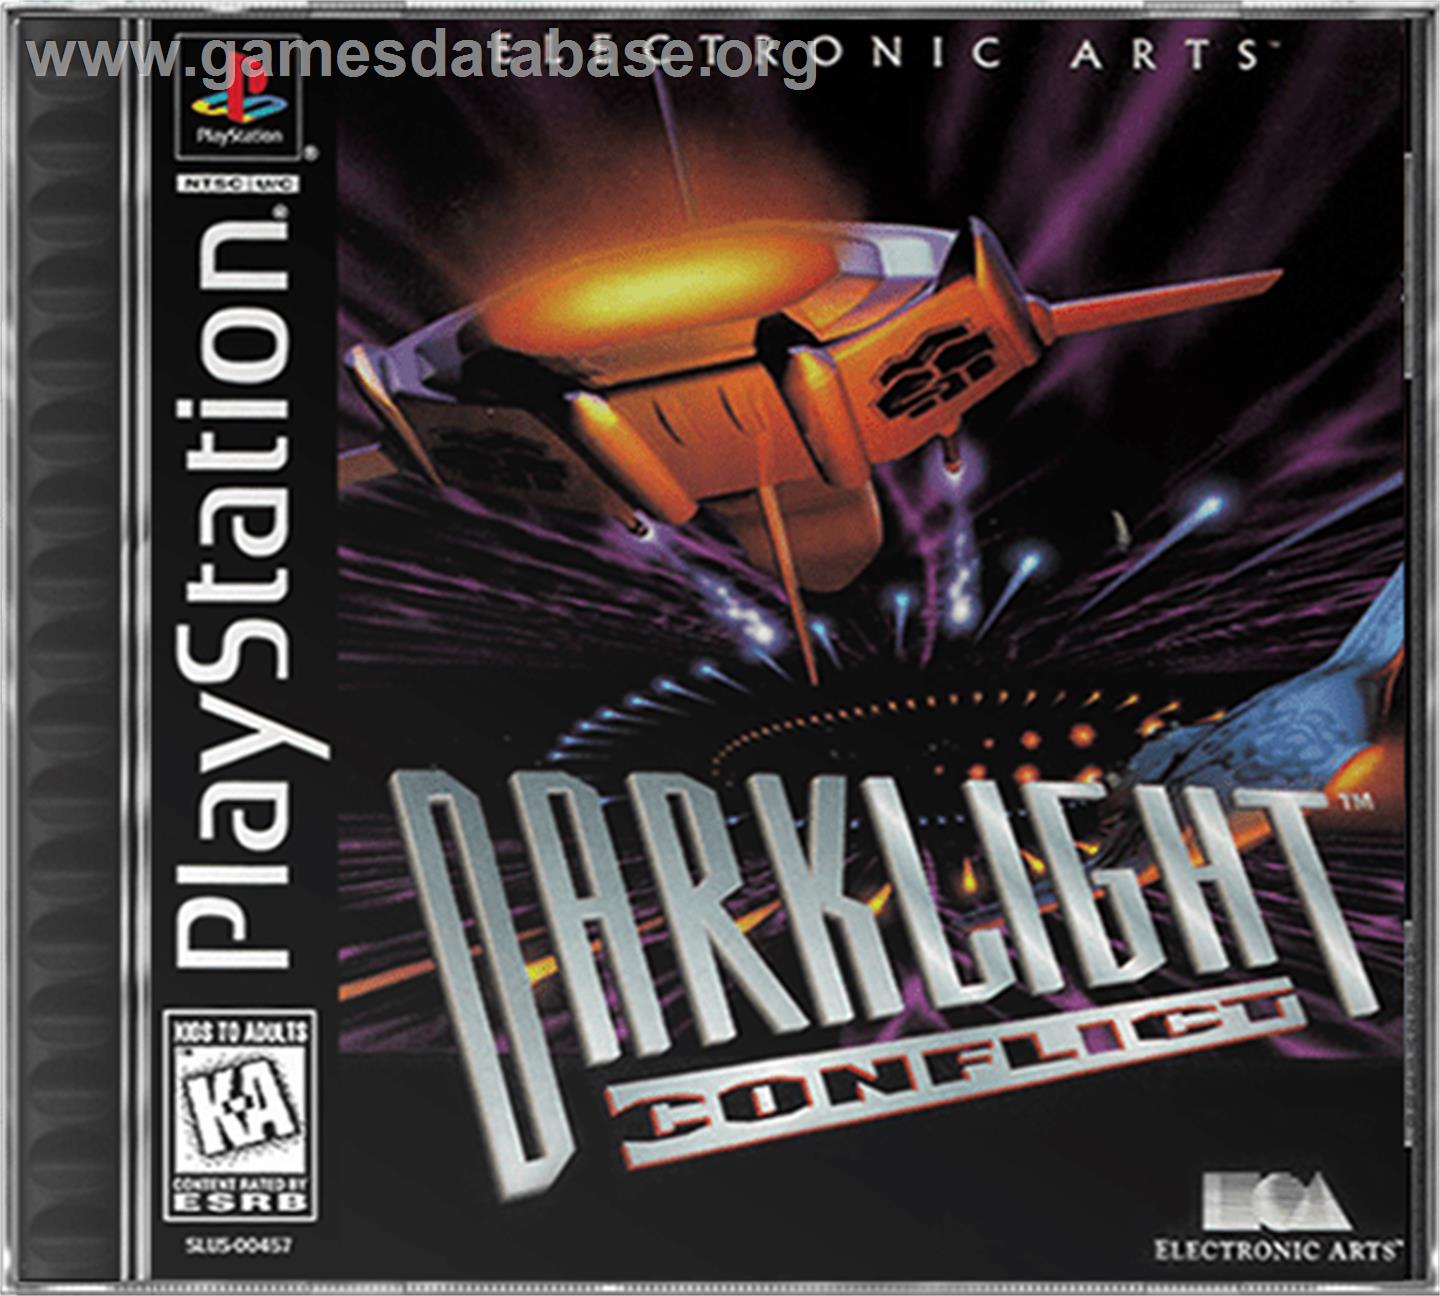 Darklight Conflict - Sony Playstation - Artwork - Box